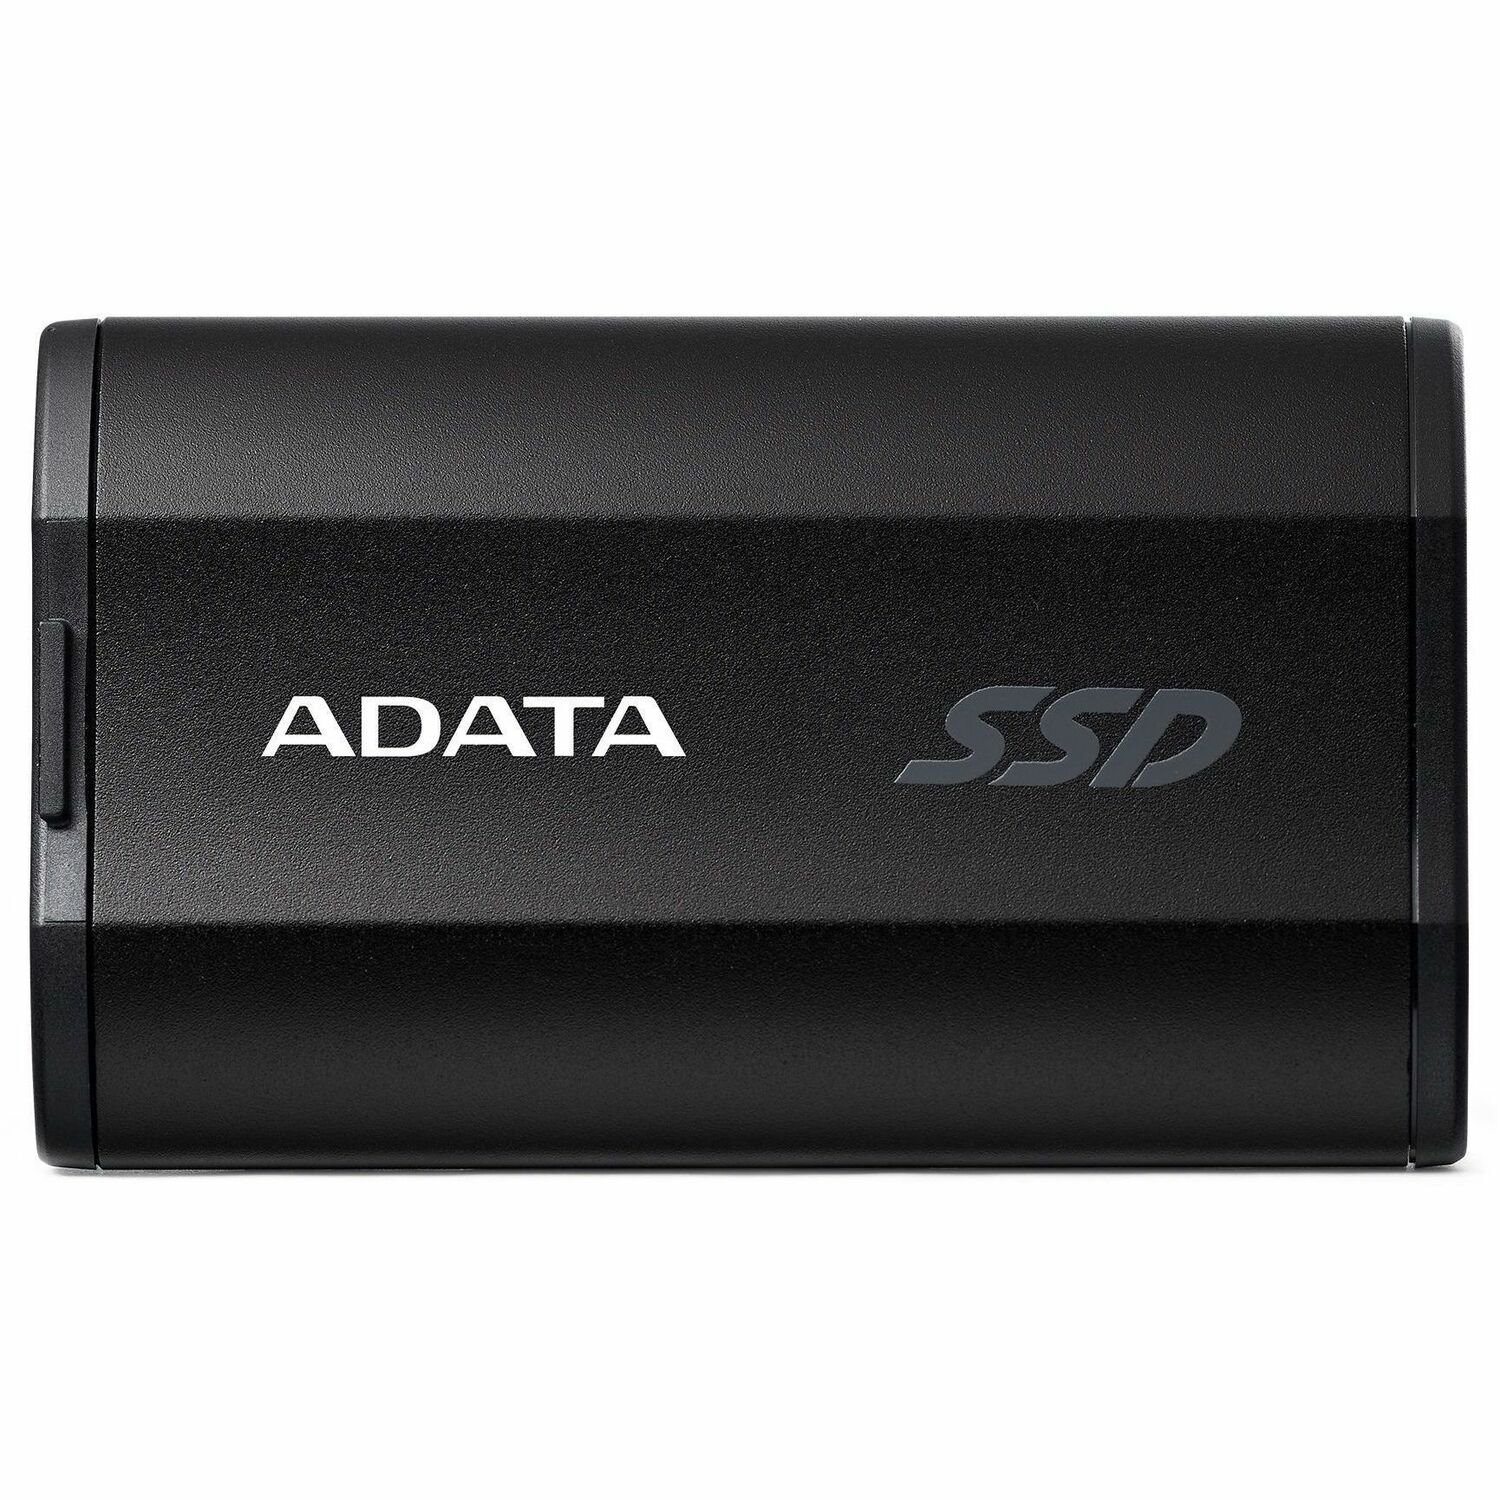 Adata SD810 500 GB Solid State Drive - External - Black